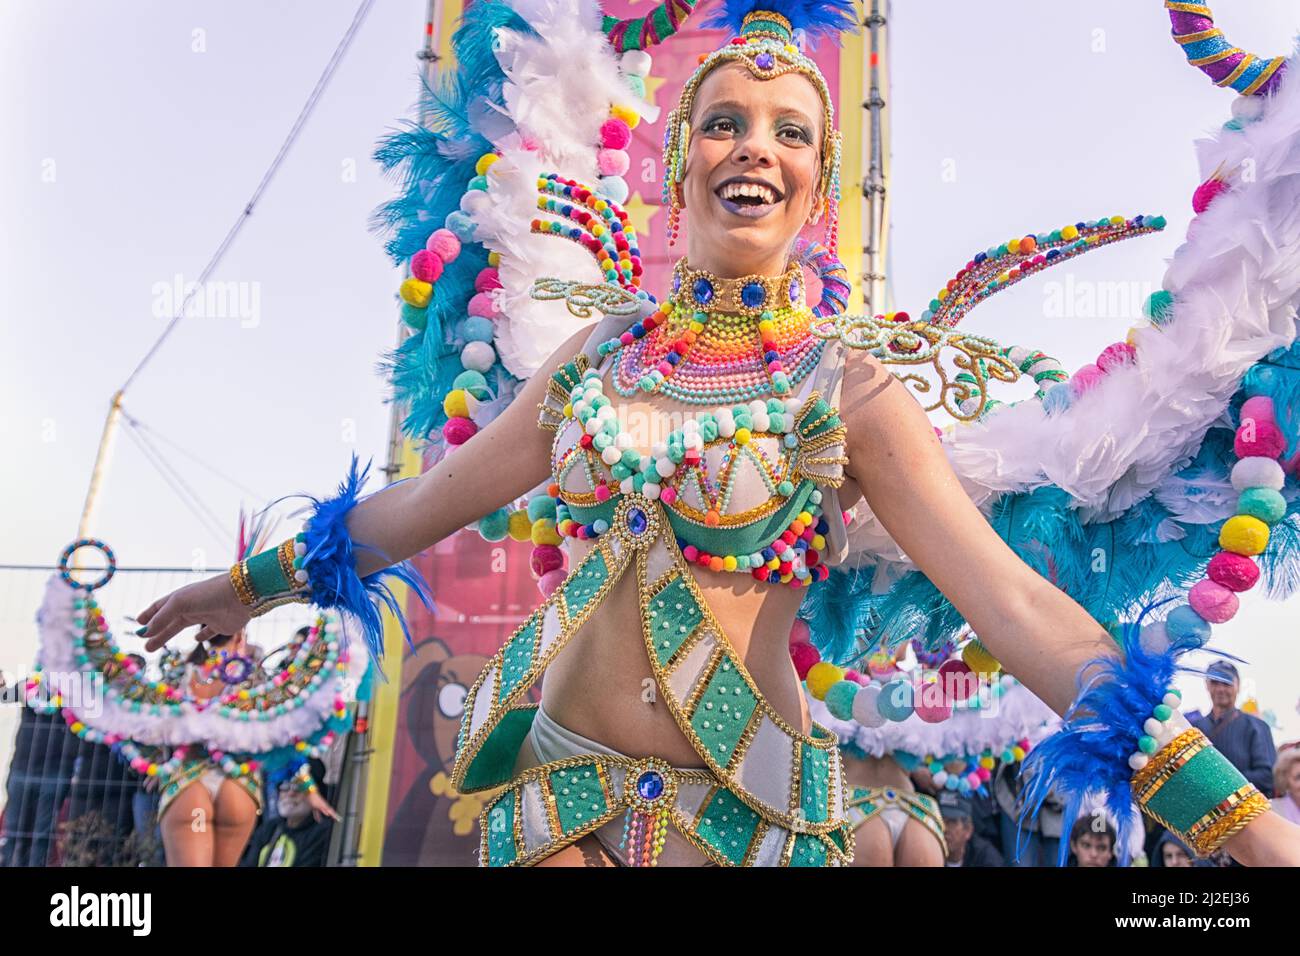 Portugal Carnaval - Female Masquerader dancing and smiling at the Ovar 'Grande Desfile' or Big Parade Stock Photo